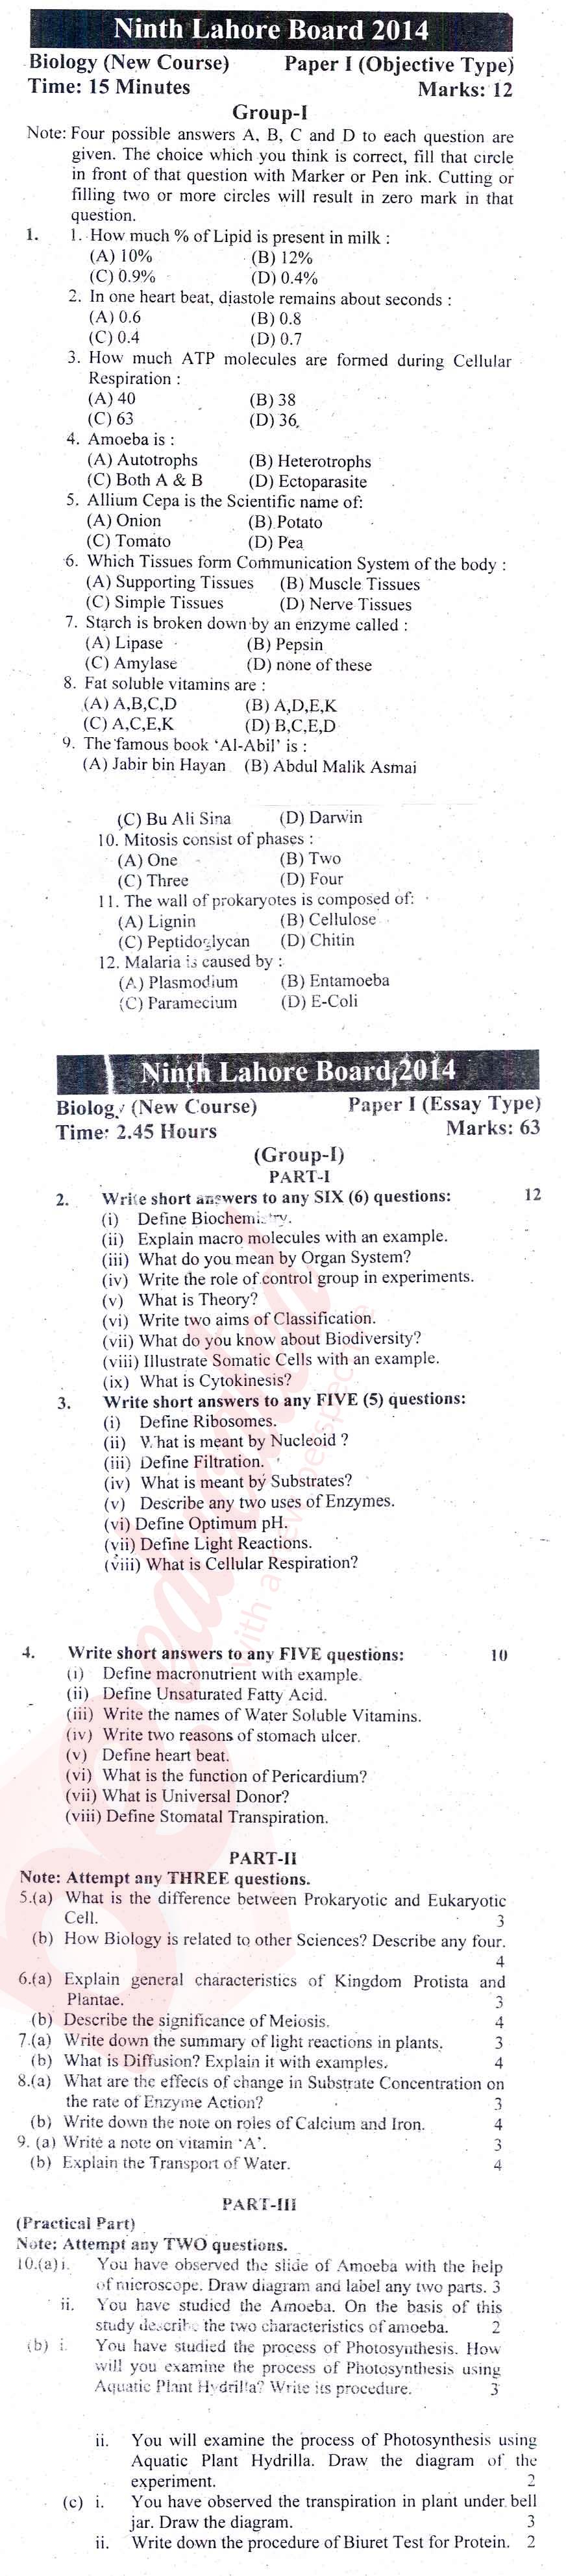 Biology 9th English Medium Past Paper Group 1 BISE Lahore 2014